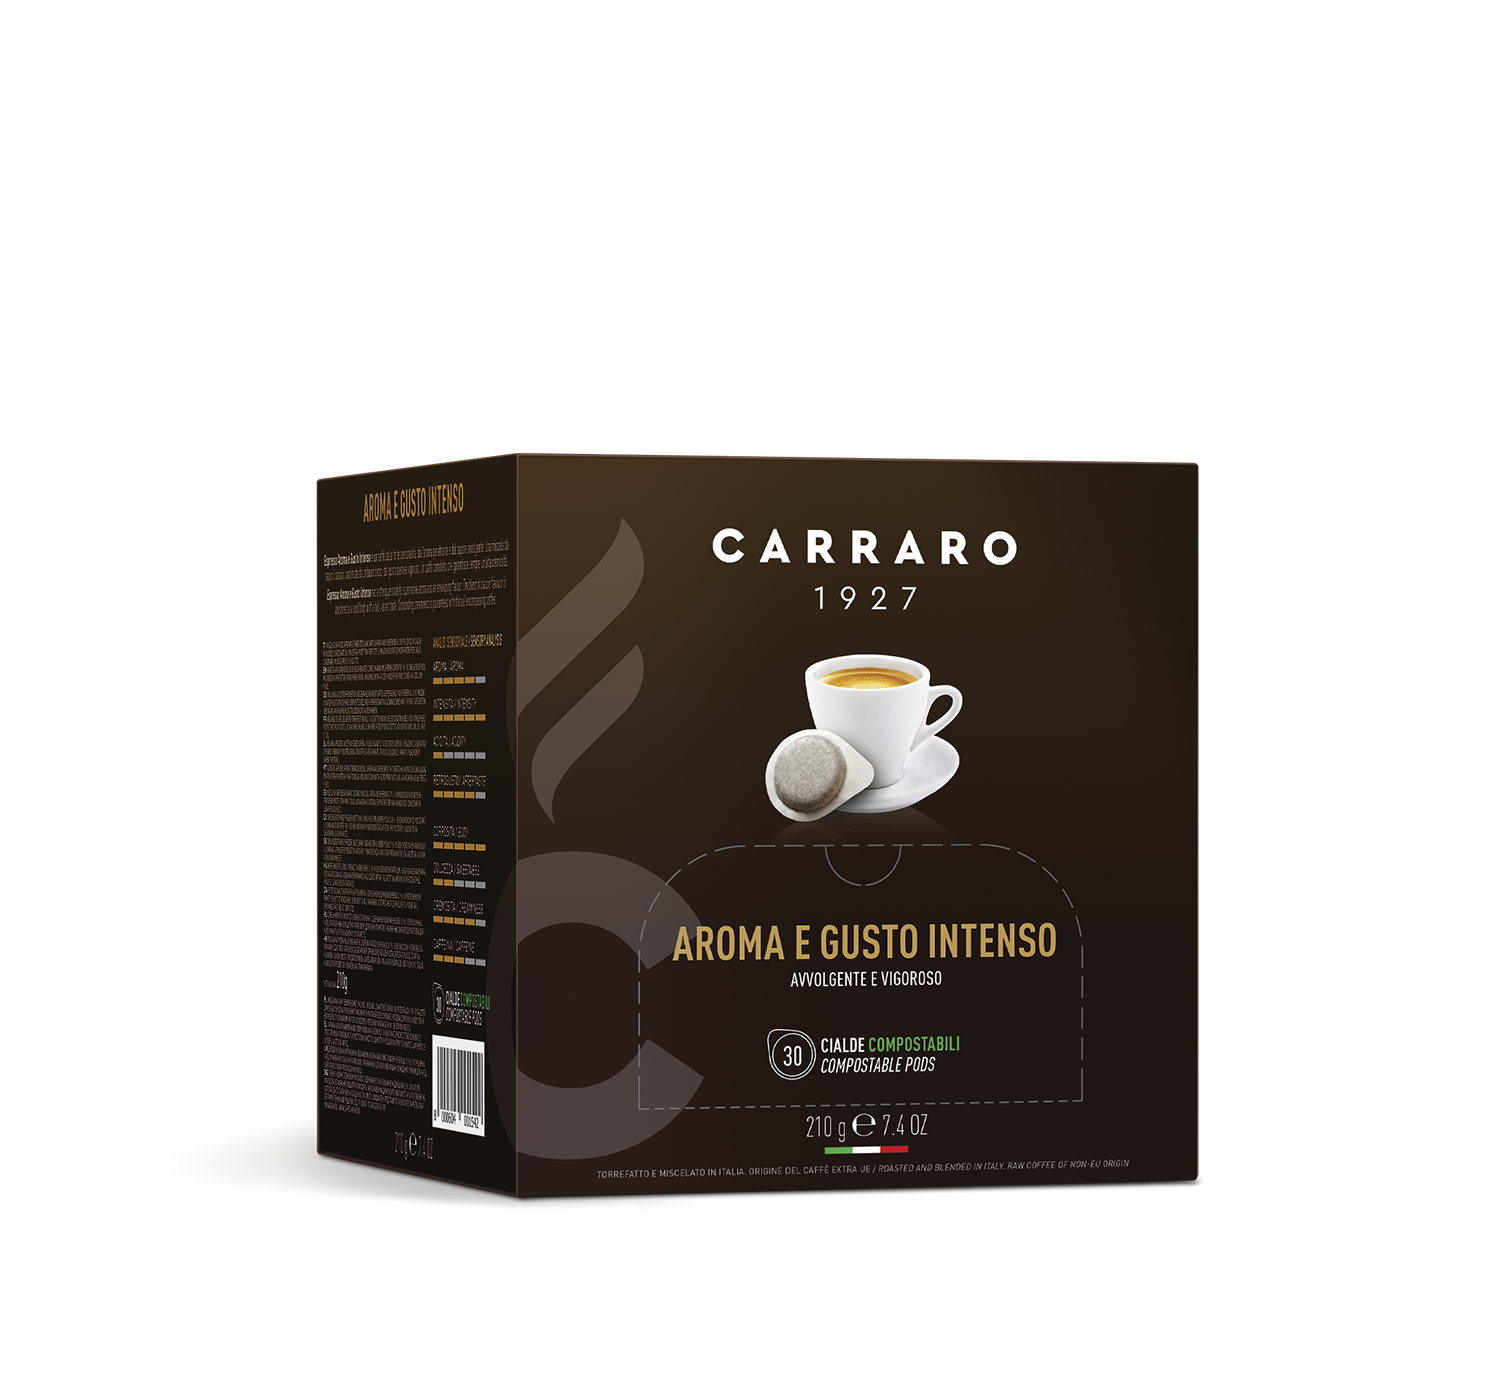 Retail - Espresso aroma e gusto intenso – 30 pods 7 g - Shop online Caffè Carraro